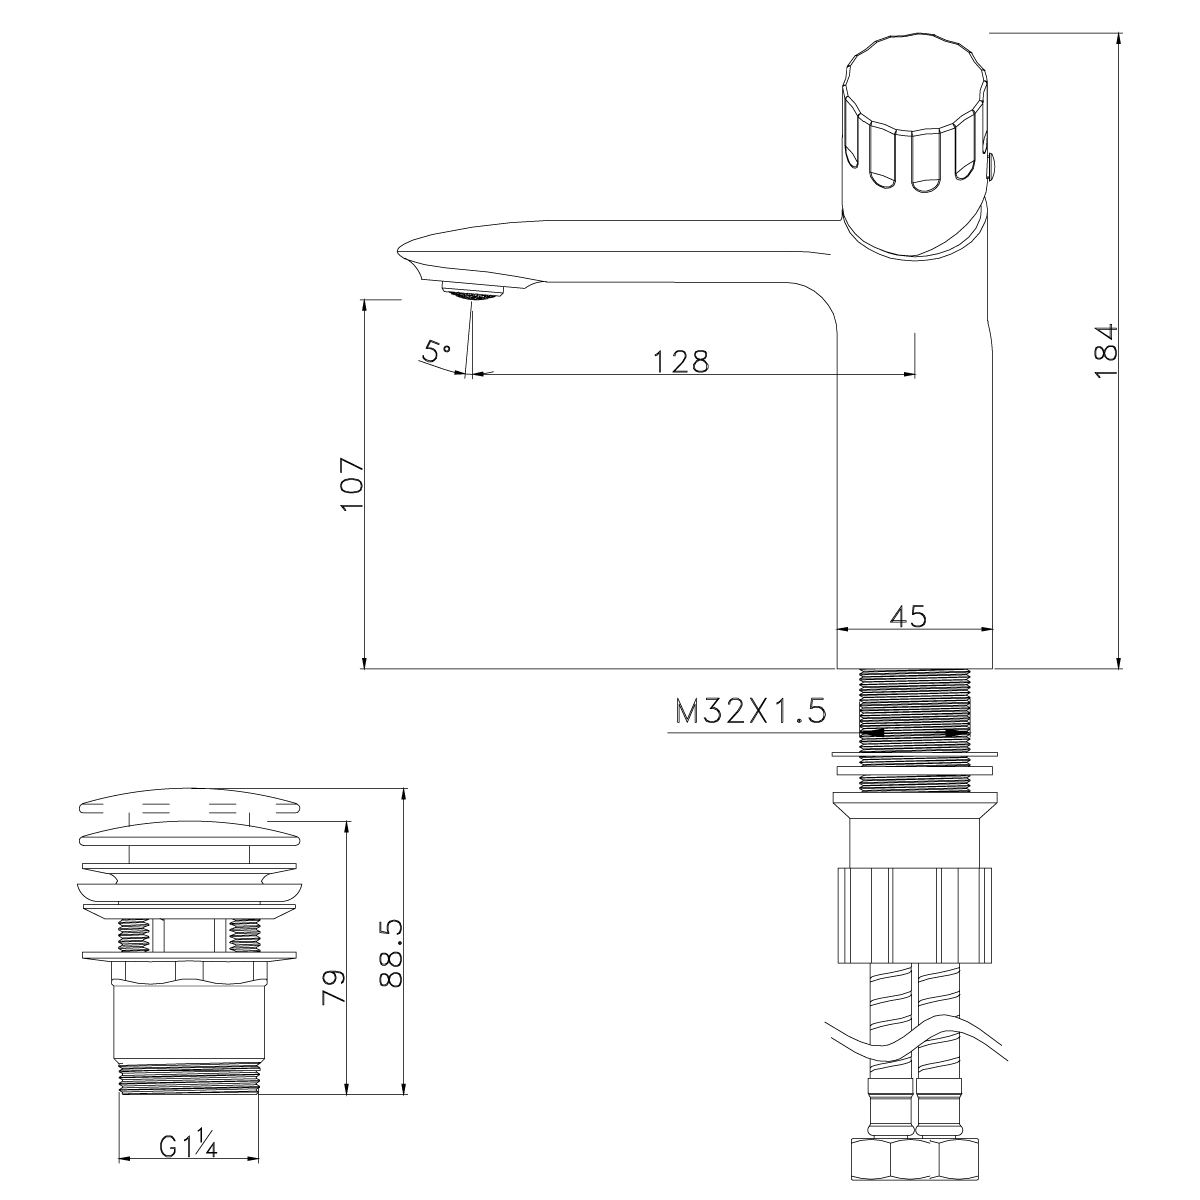 LM5306C Washbasin faucet